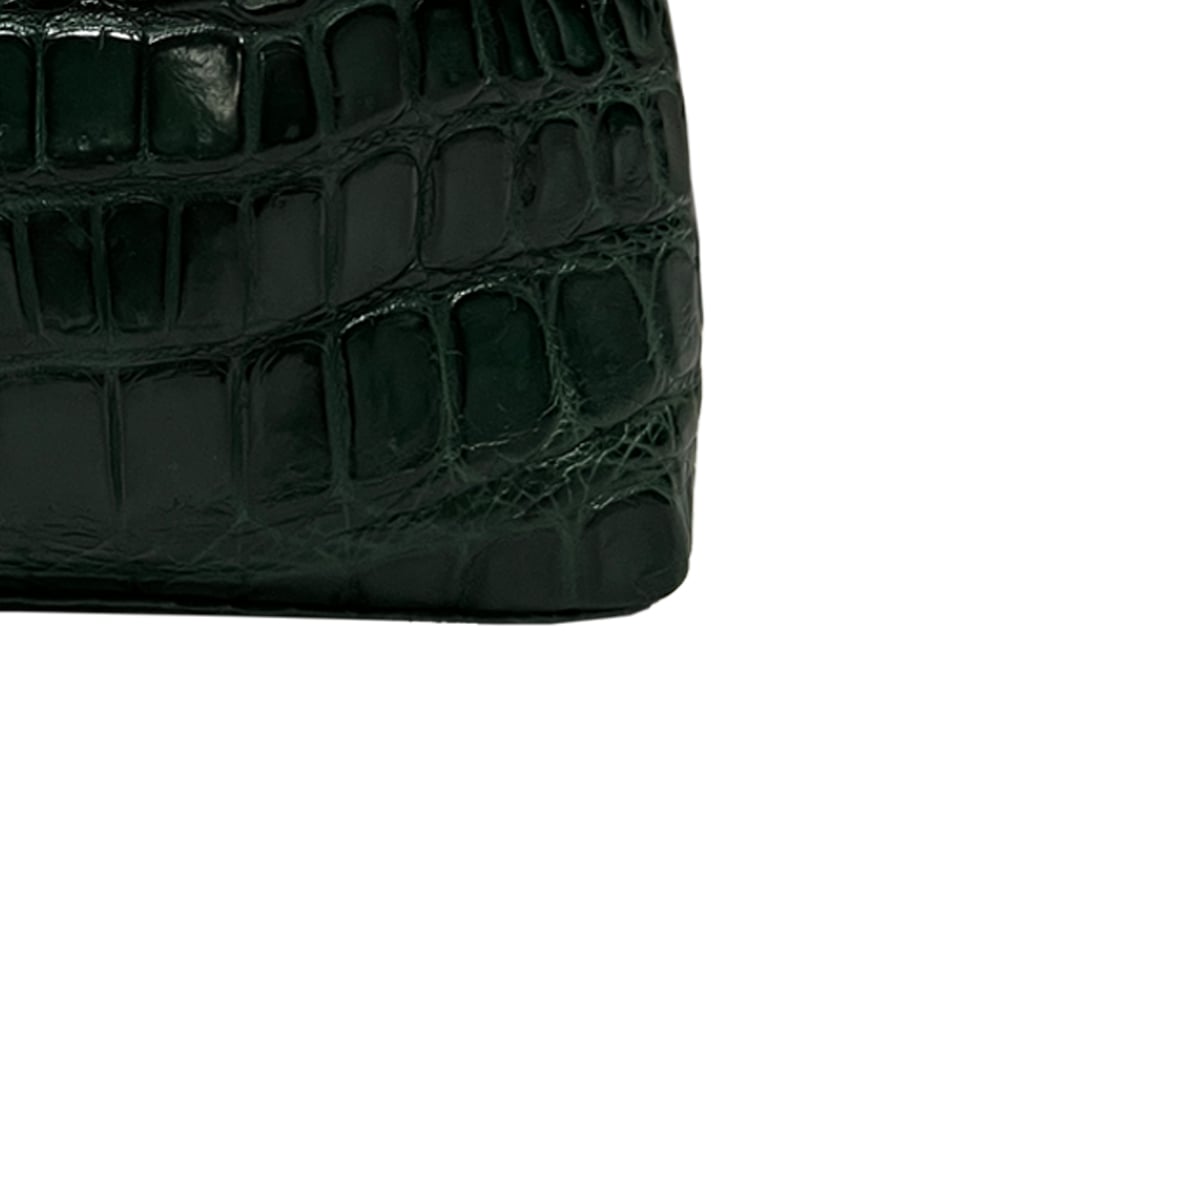 ROSIE Crocodile Belly Clutch Bag Matte Green Size 18